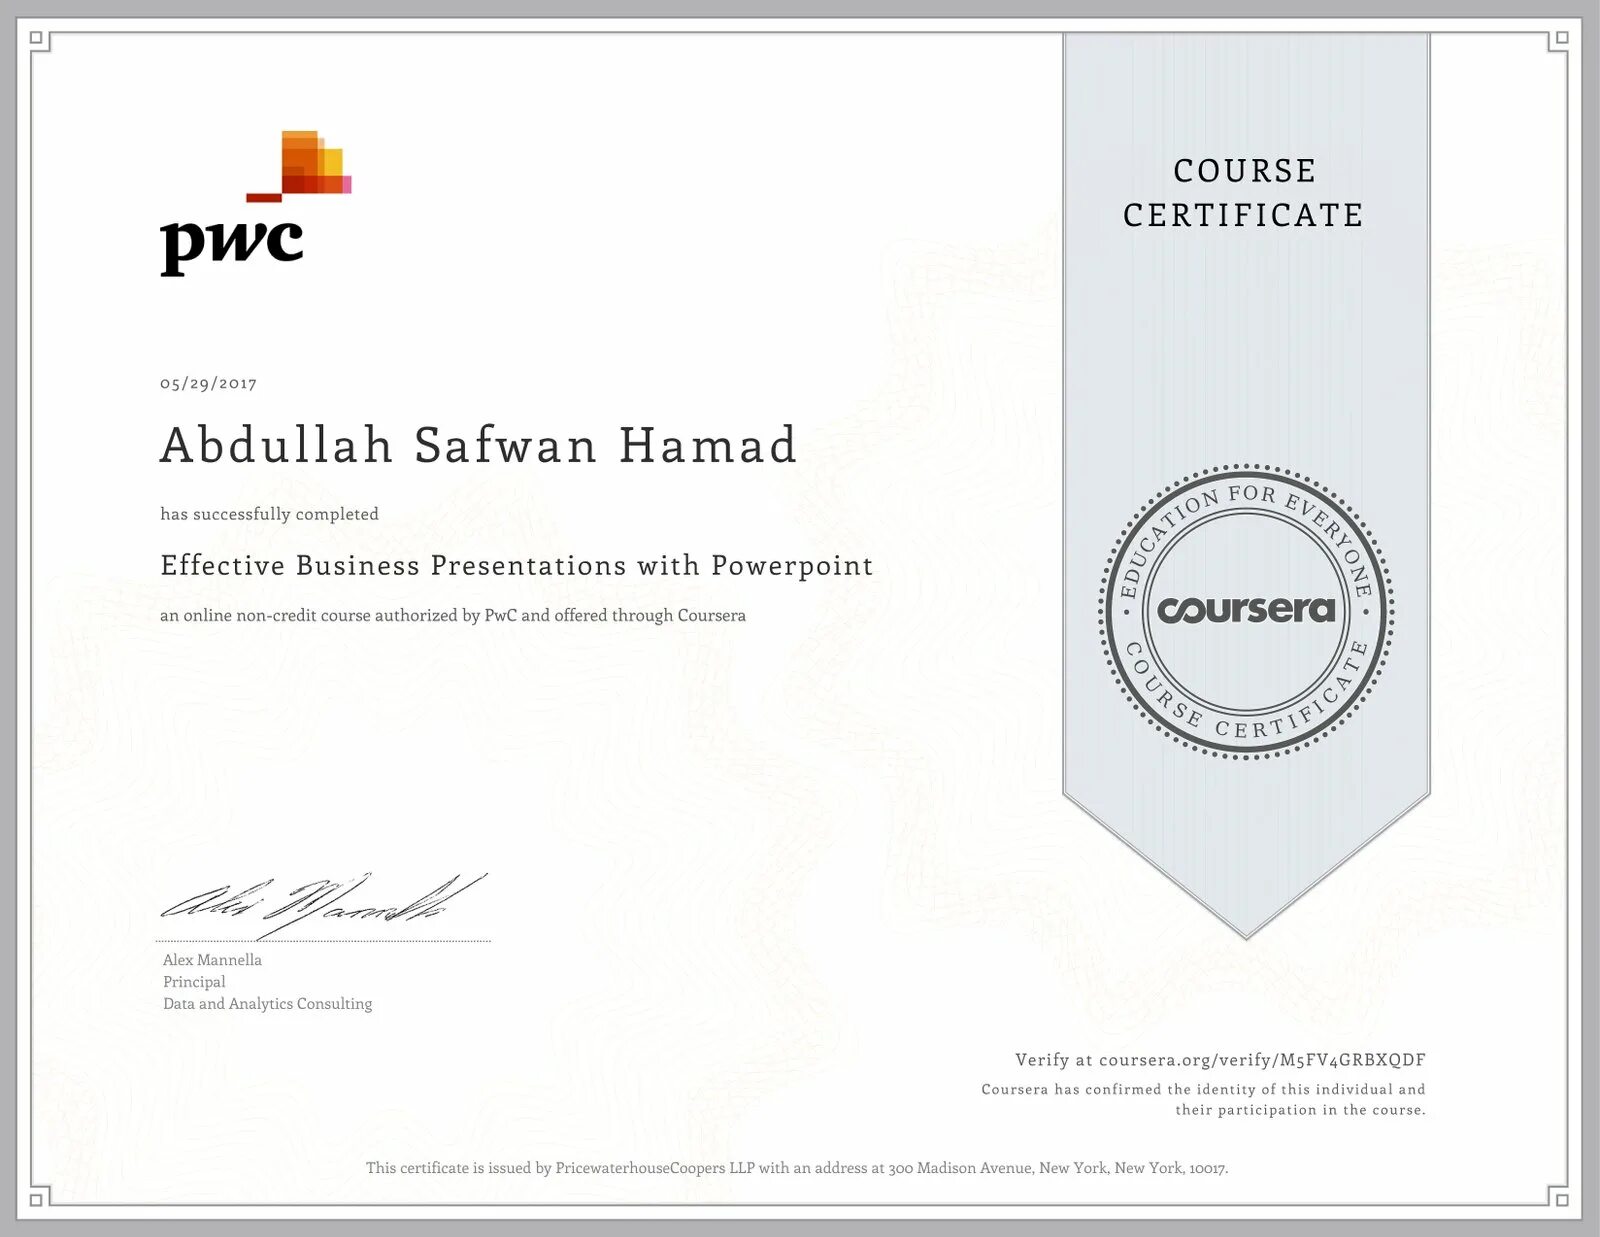 Made certificate. Сертификат Coursera. Как выглядит сертификат Coursera. PWC сертификат.